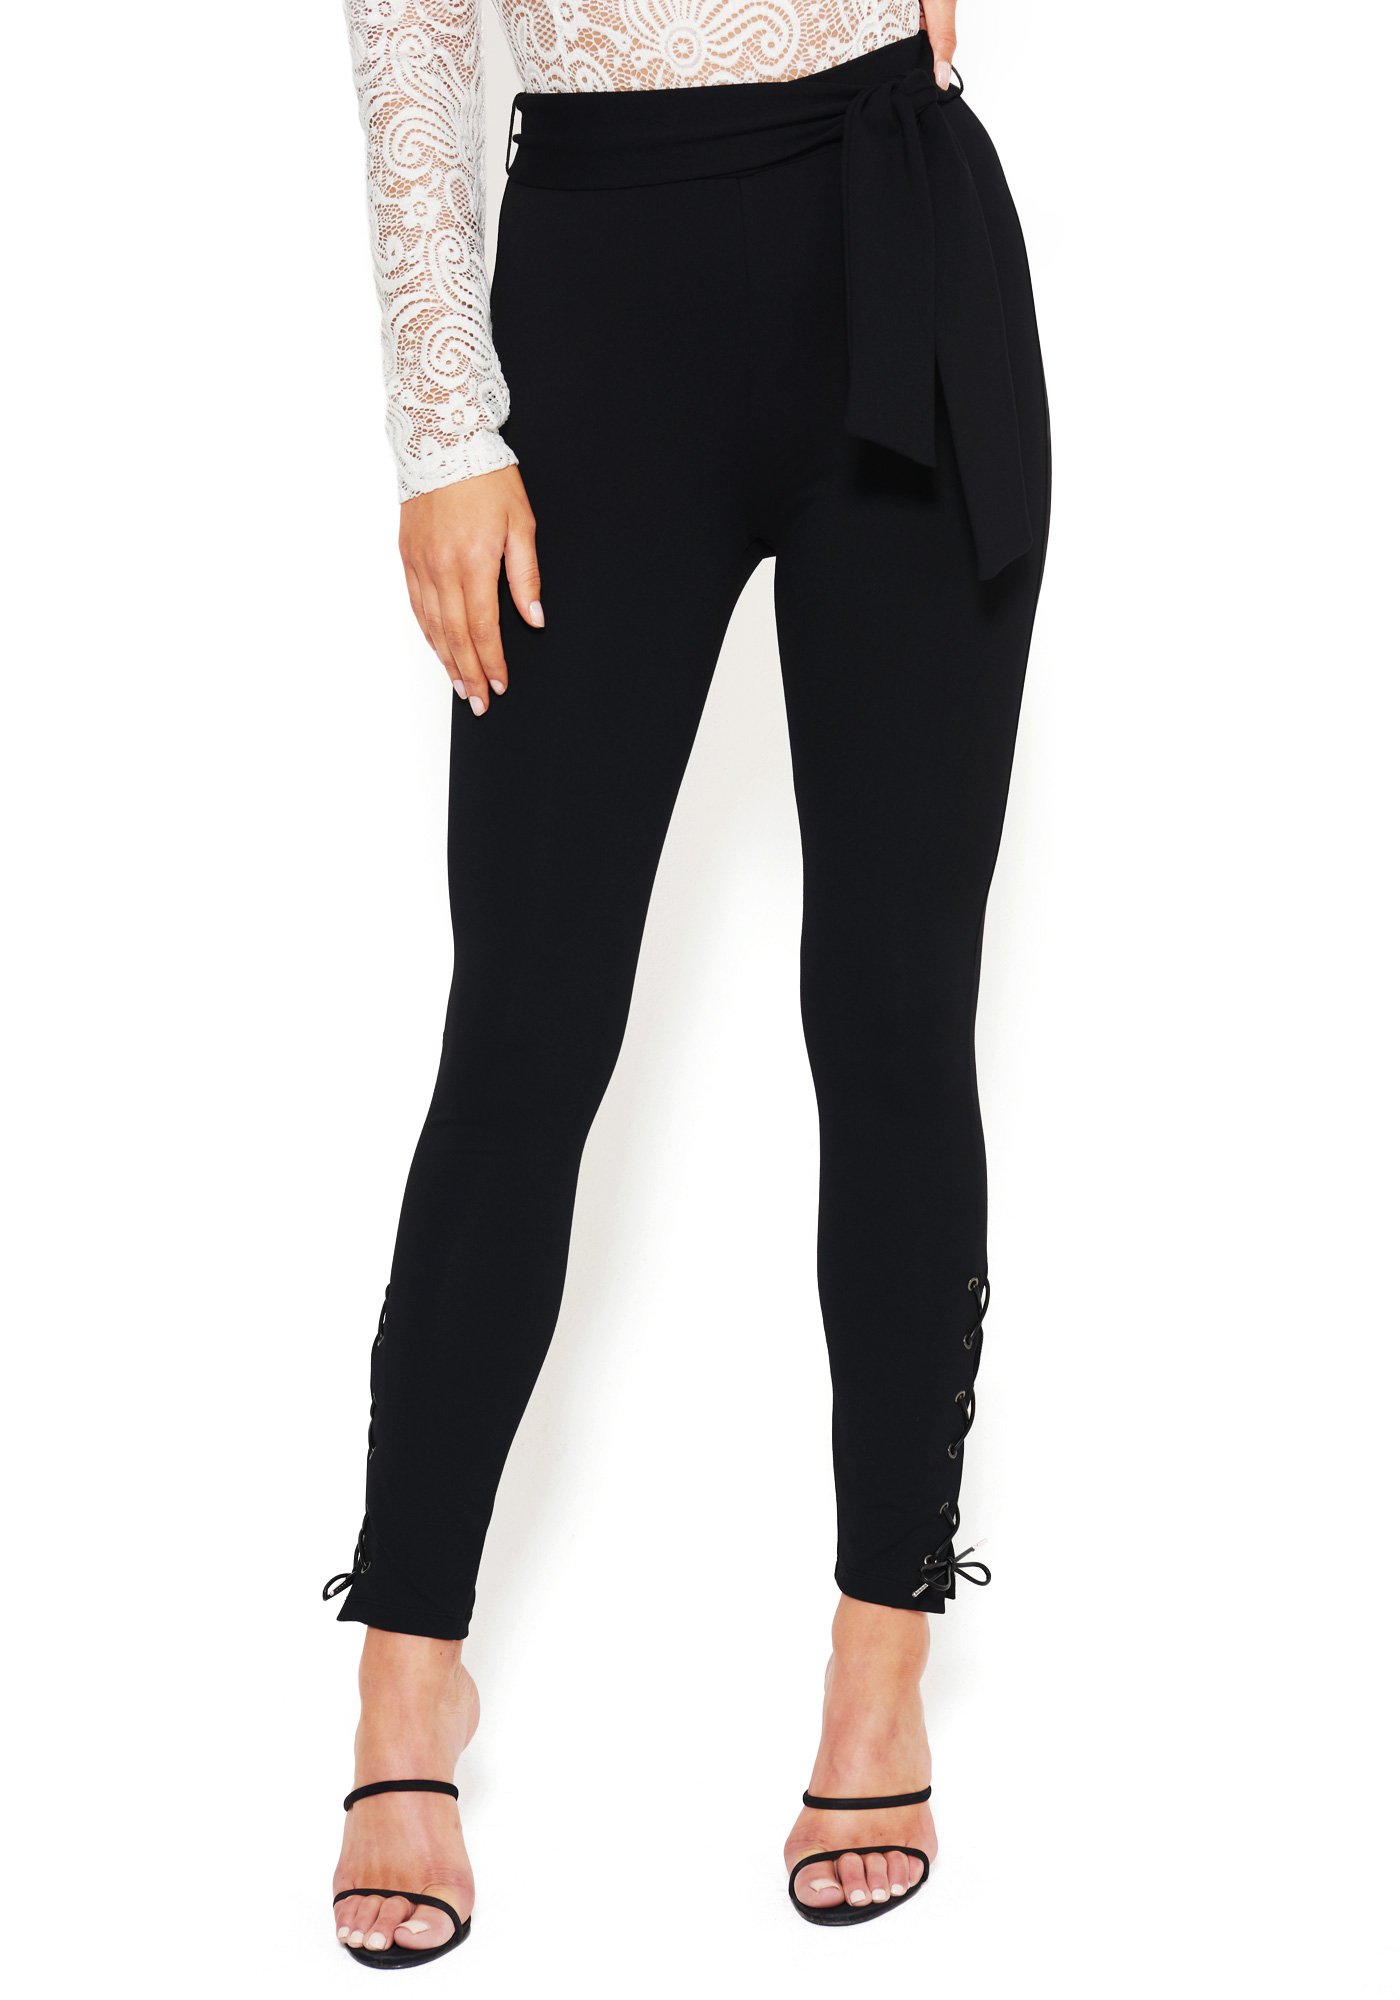 Bebe Women's Bow Detail Side Lacing Legging, Size XL in BLACK Spandex/Nylon